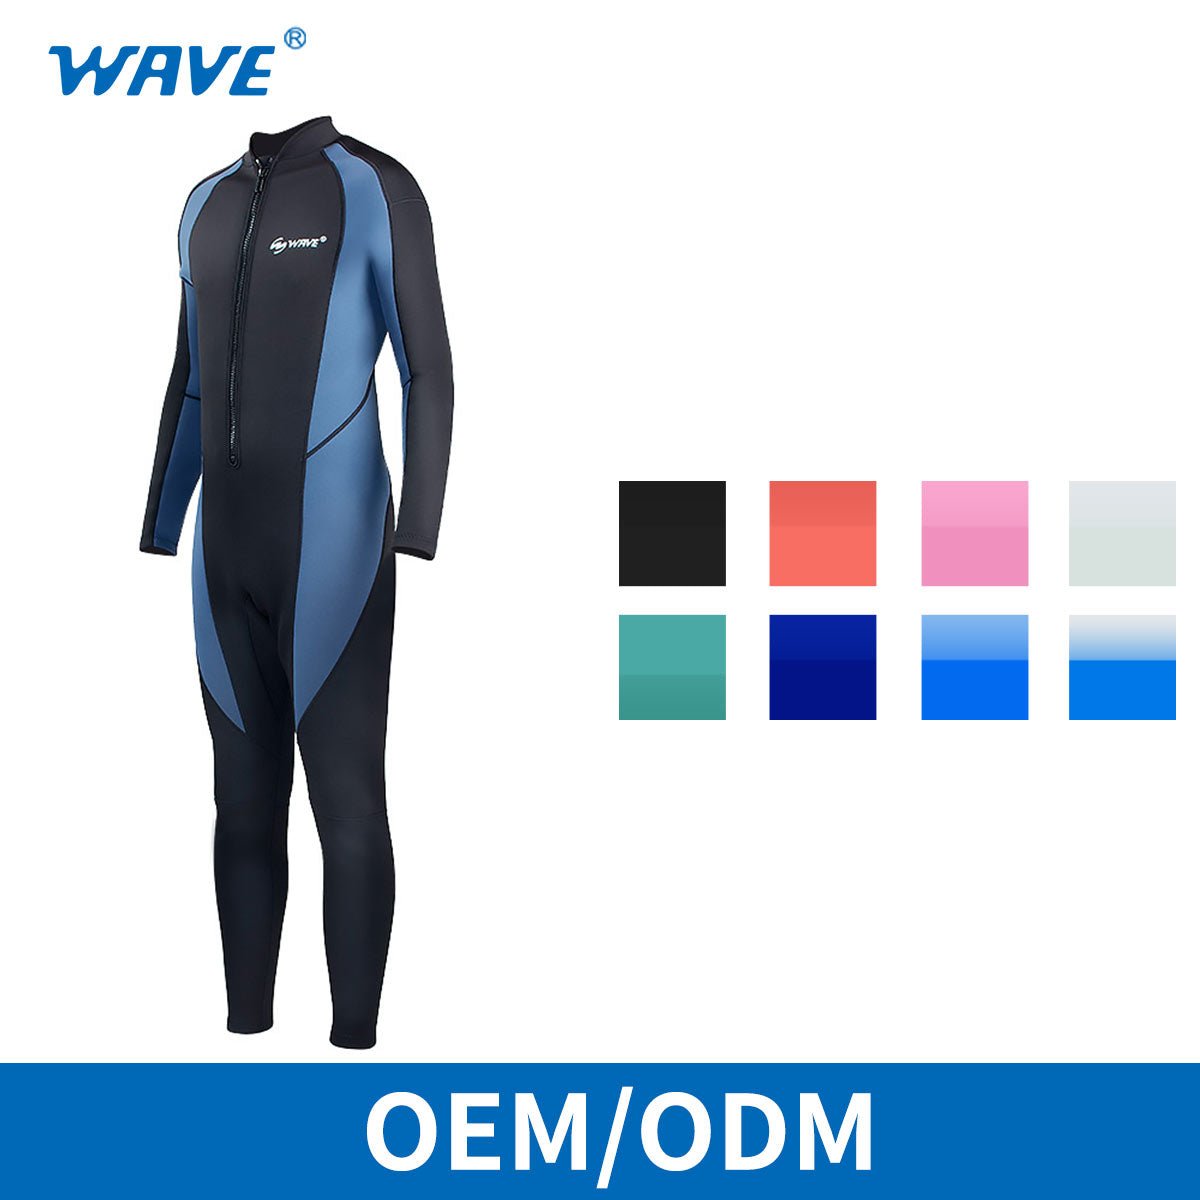 OEM ODM 潜水衣潜水服男式全身深海防水封闭式潜水服